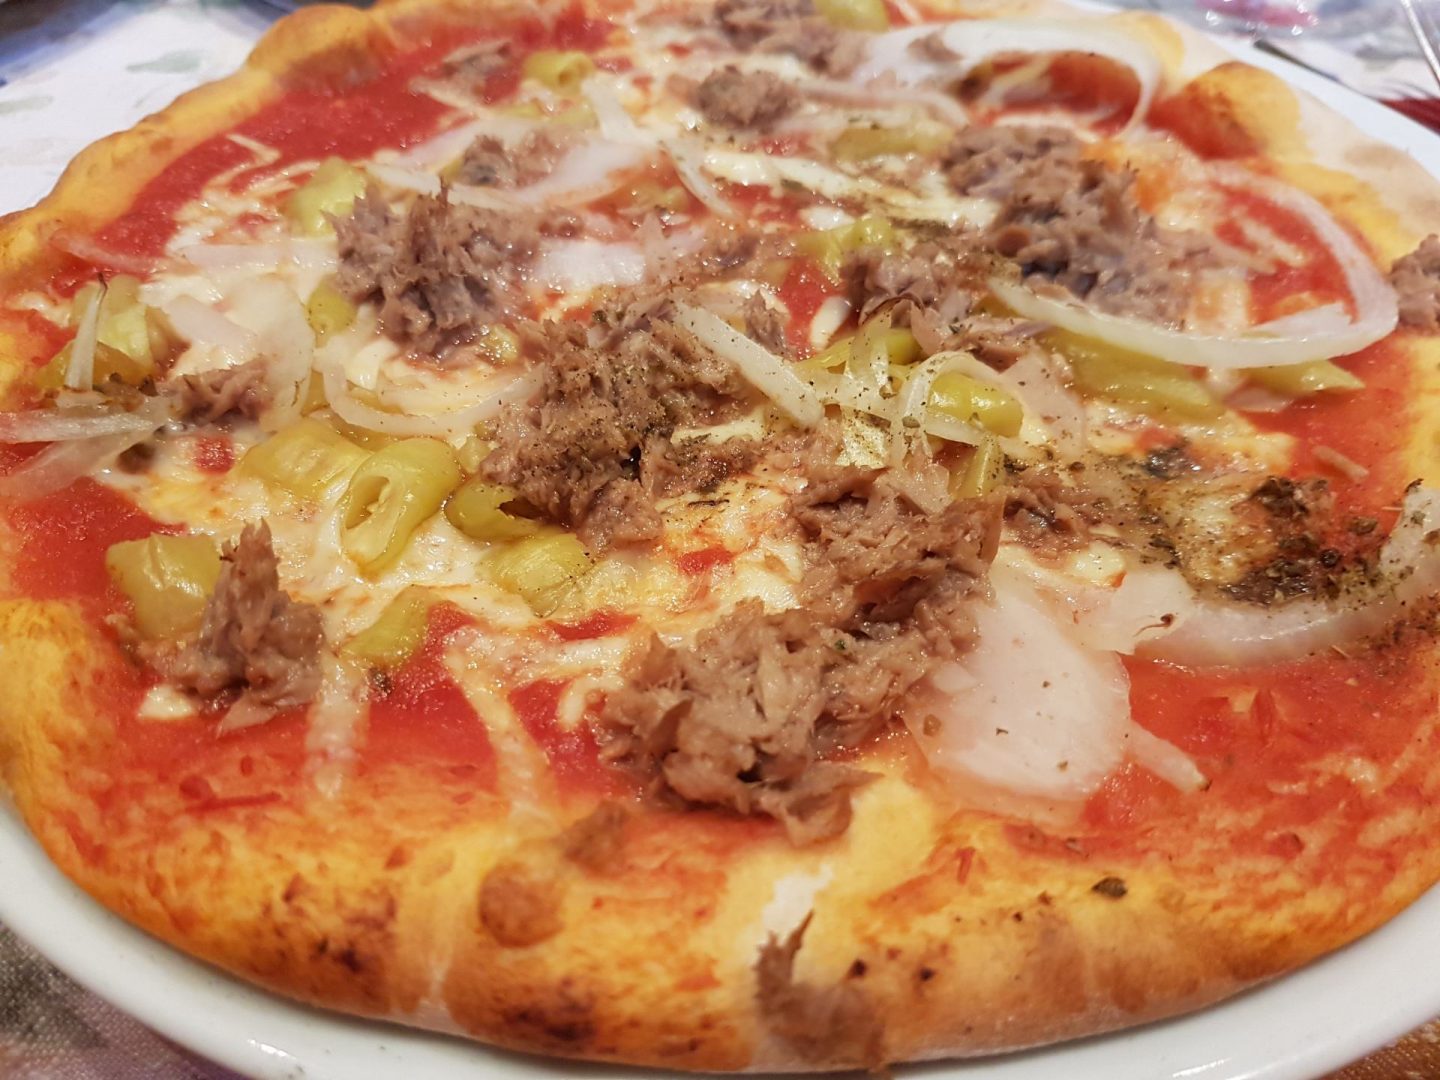 Erfahrung Bewertung Kritik Pizzeria Don Camillo Reith im Alpbachtal Pizza Pugliese Foodblog Sternestulle